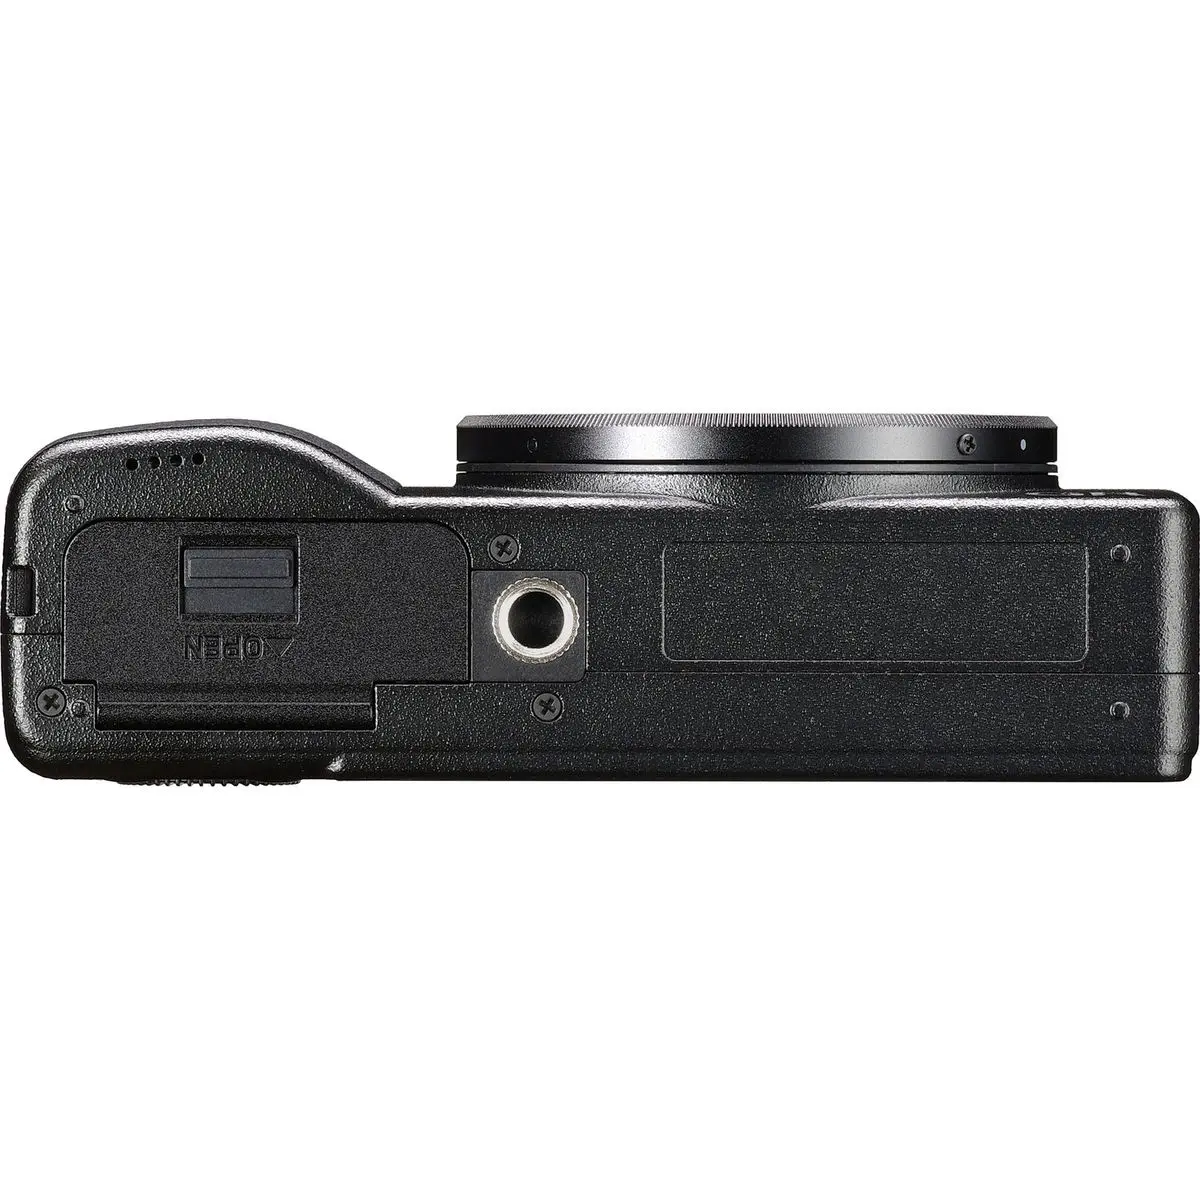 3. Ricoh GR III Camera